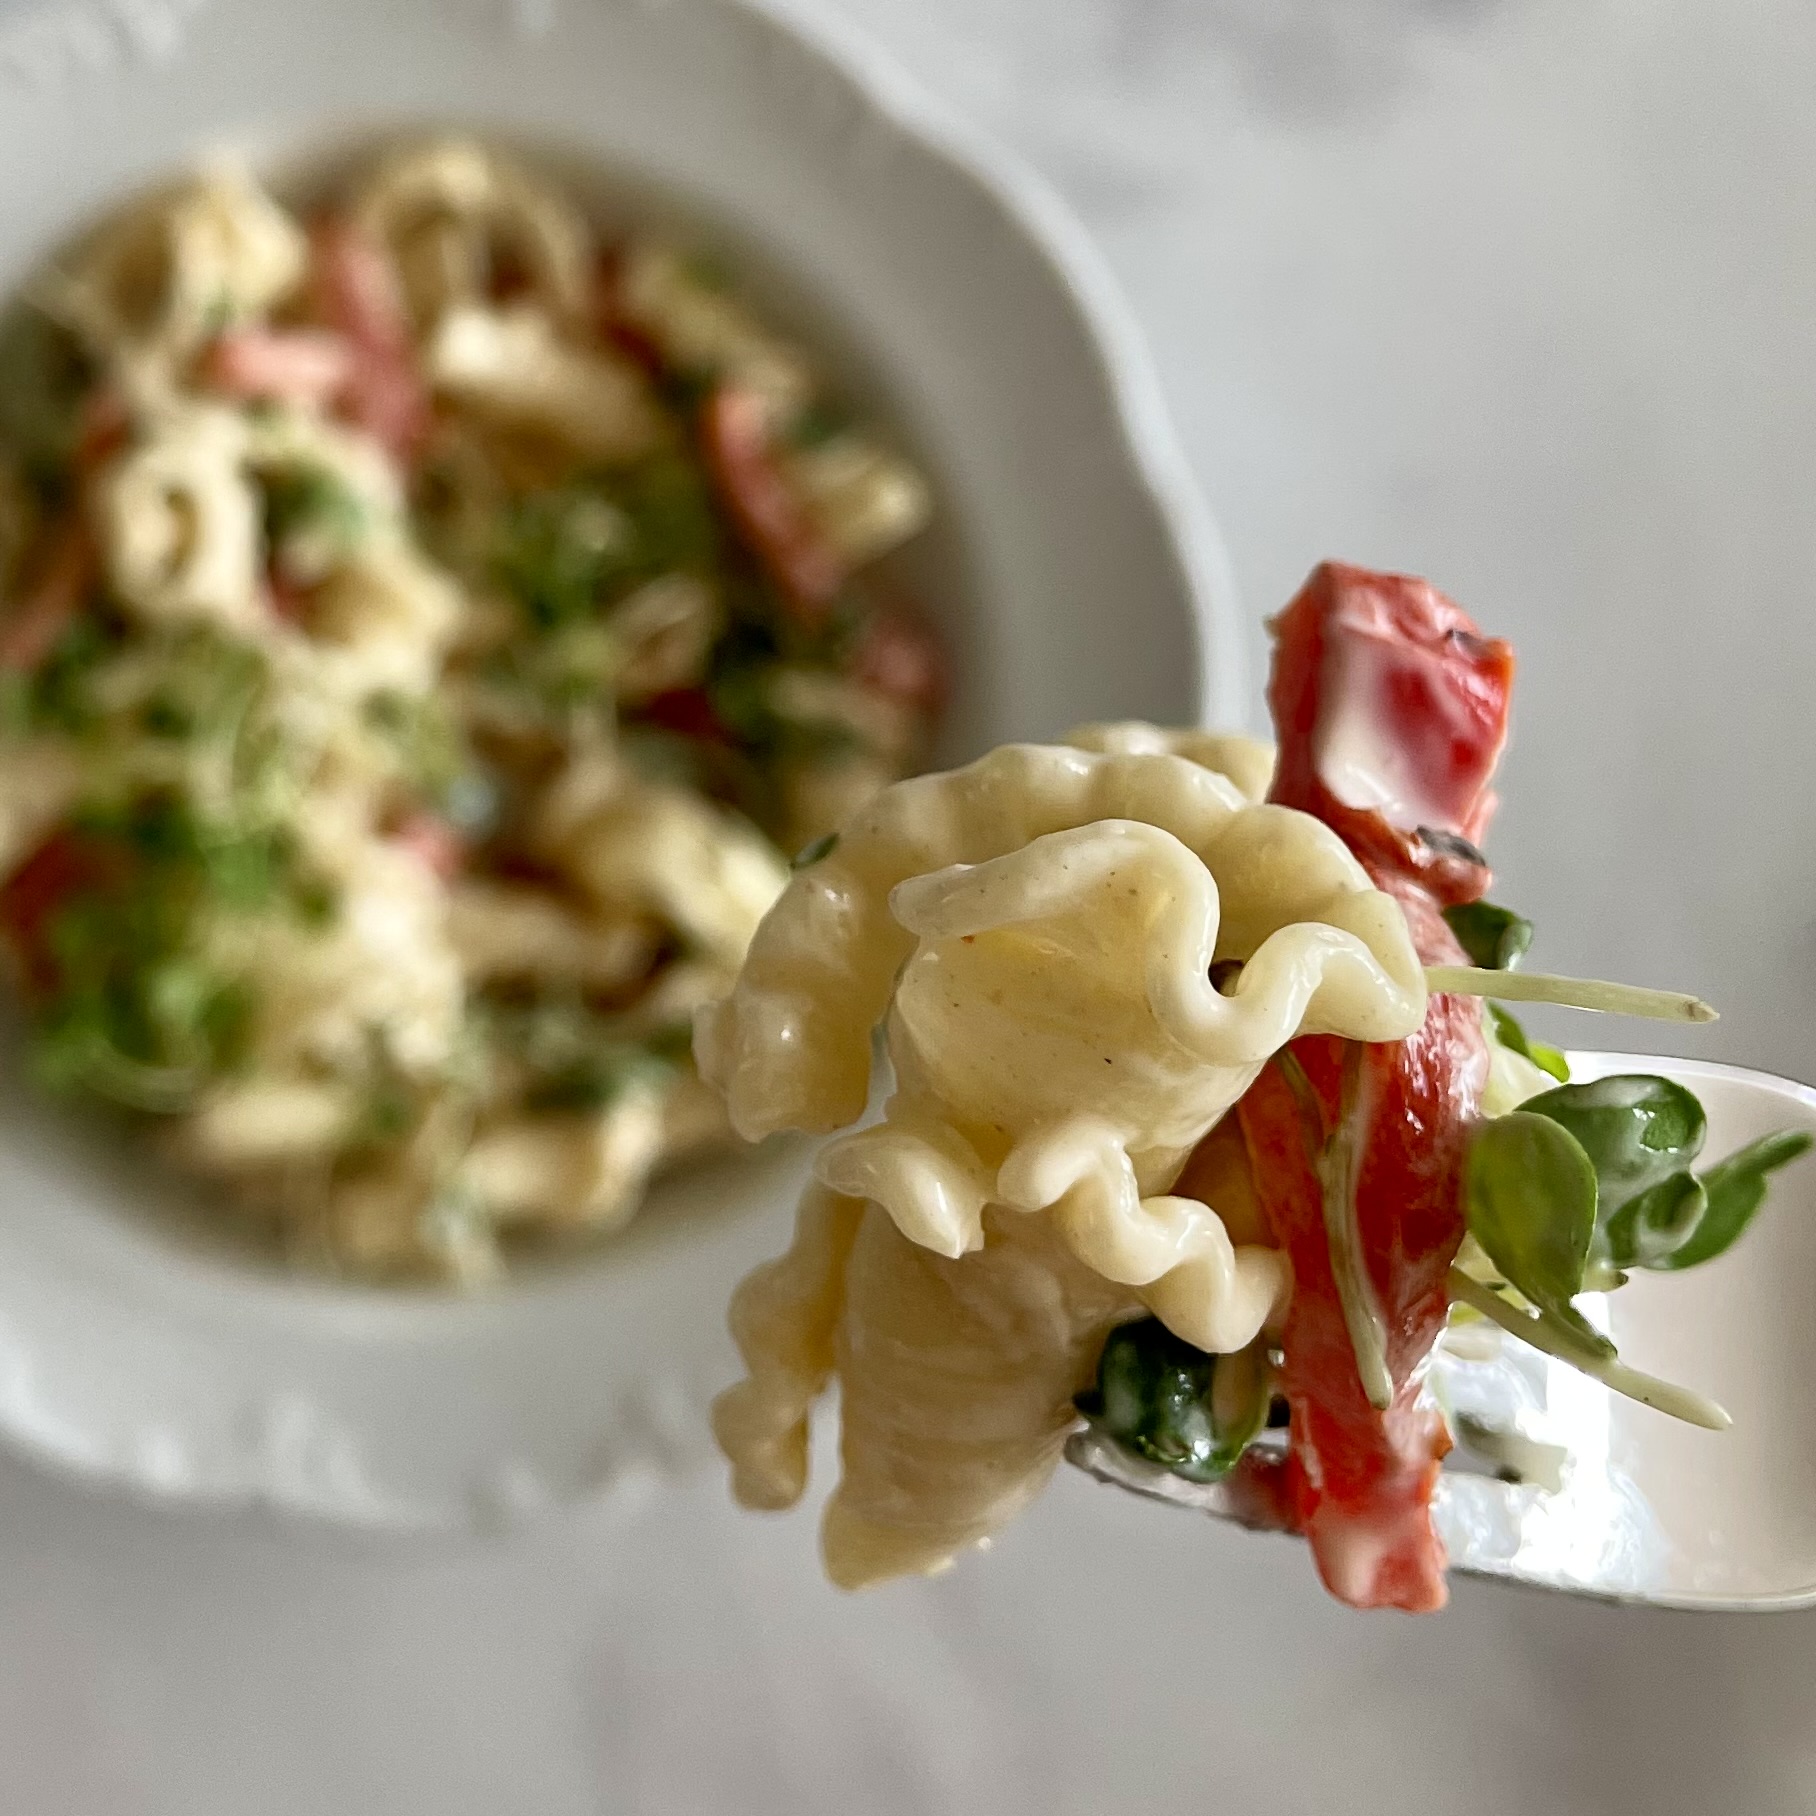 creamy plant-based macaroni salad_a forkful of the salad